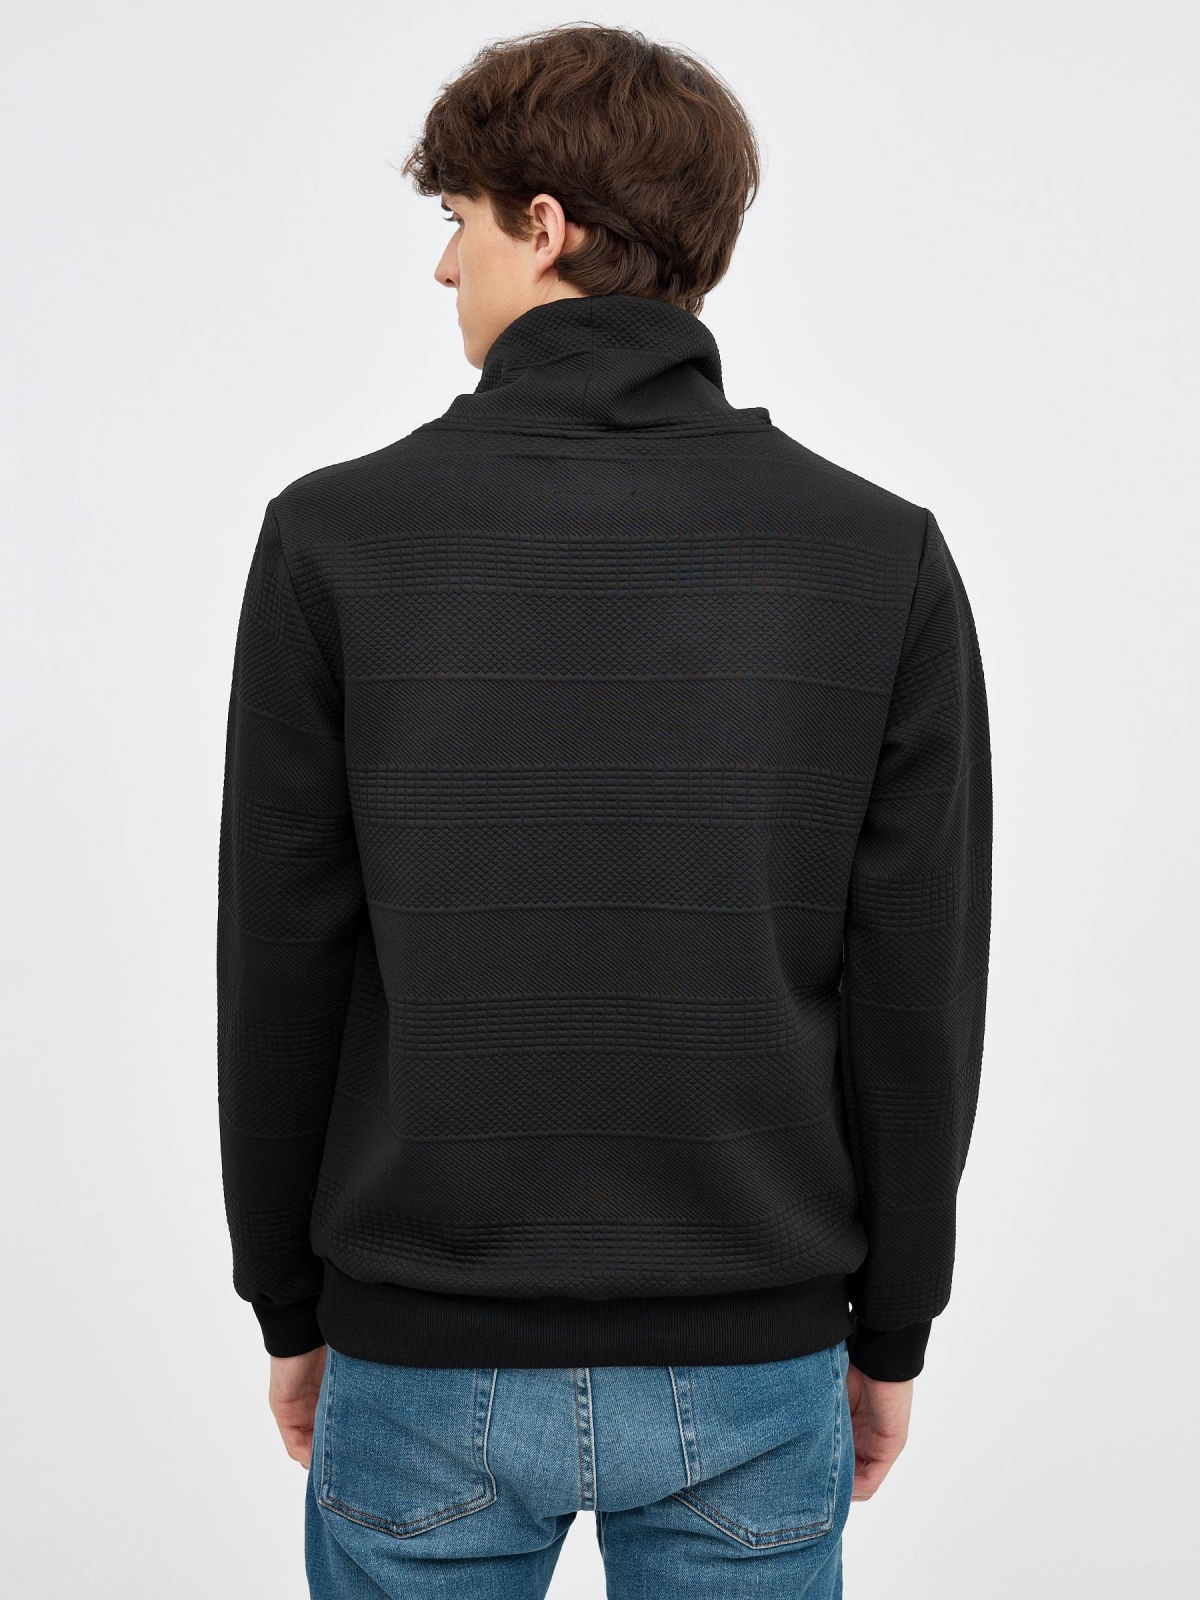 Textured crewneck sweatshirt black middle back view